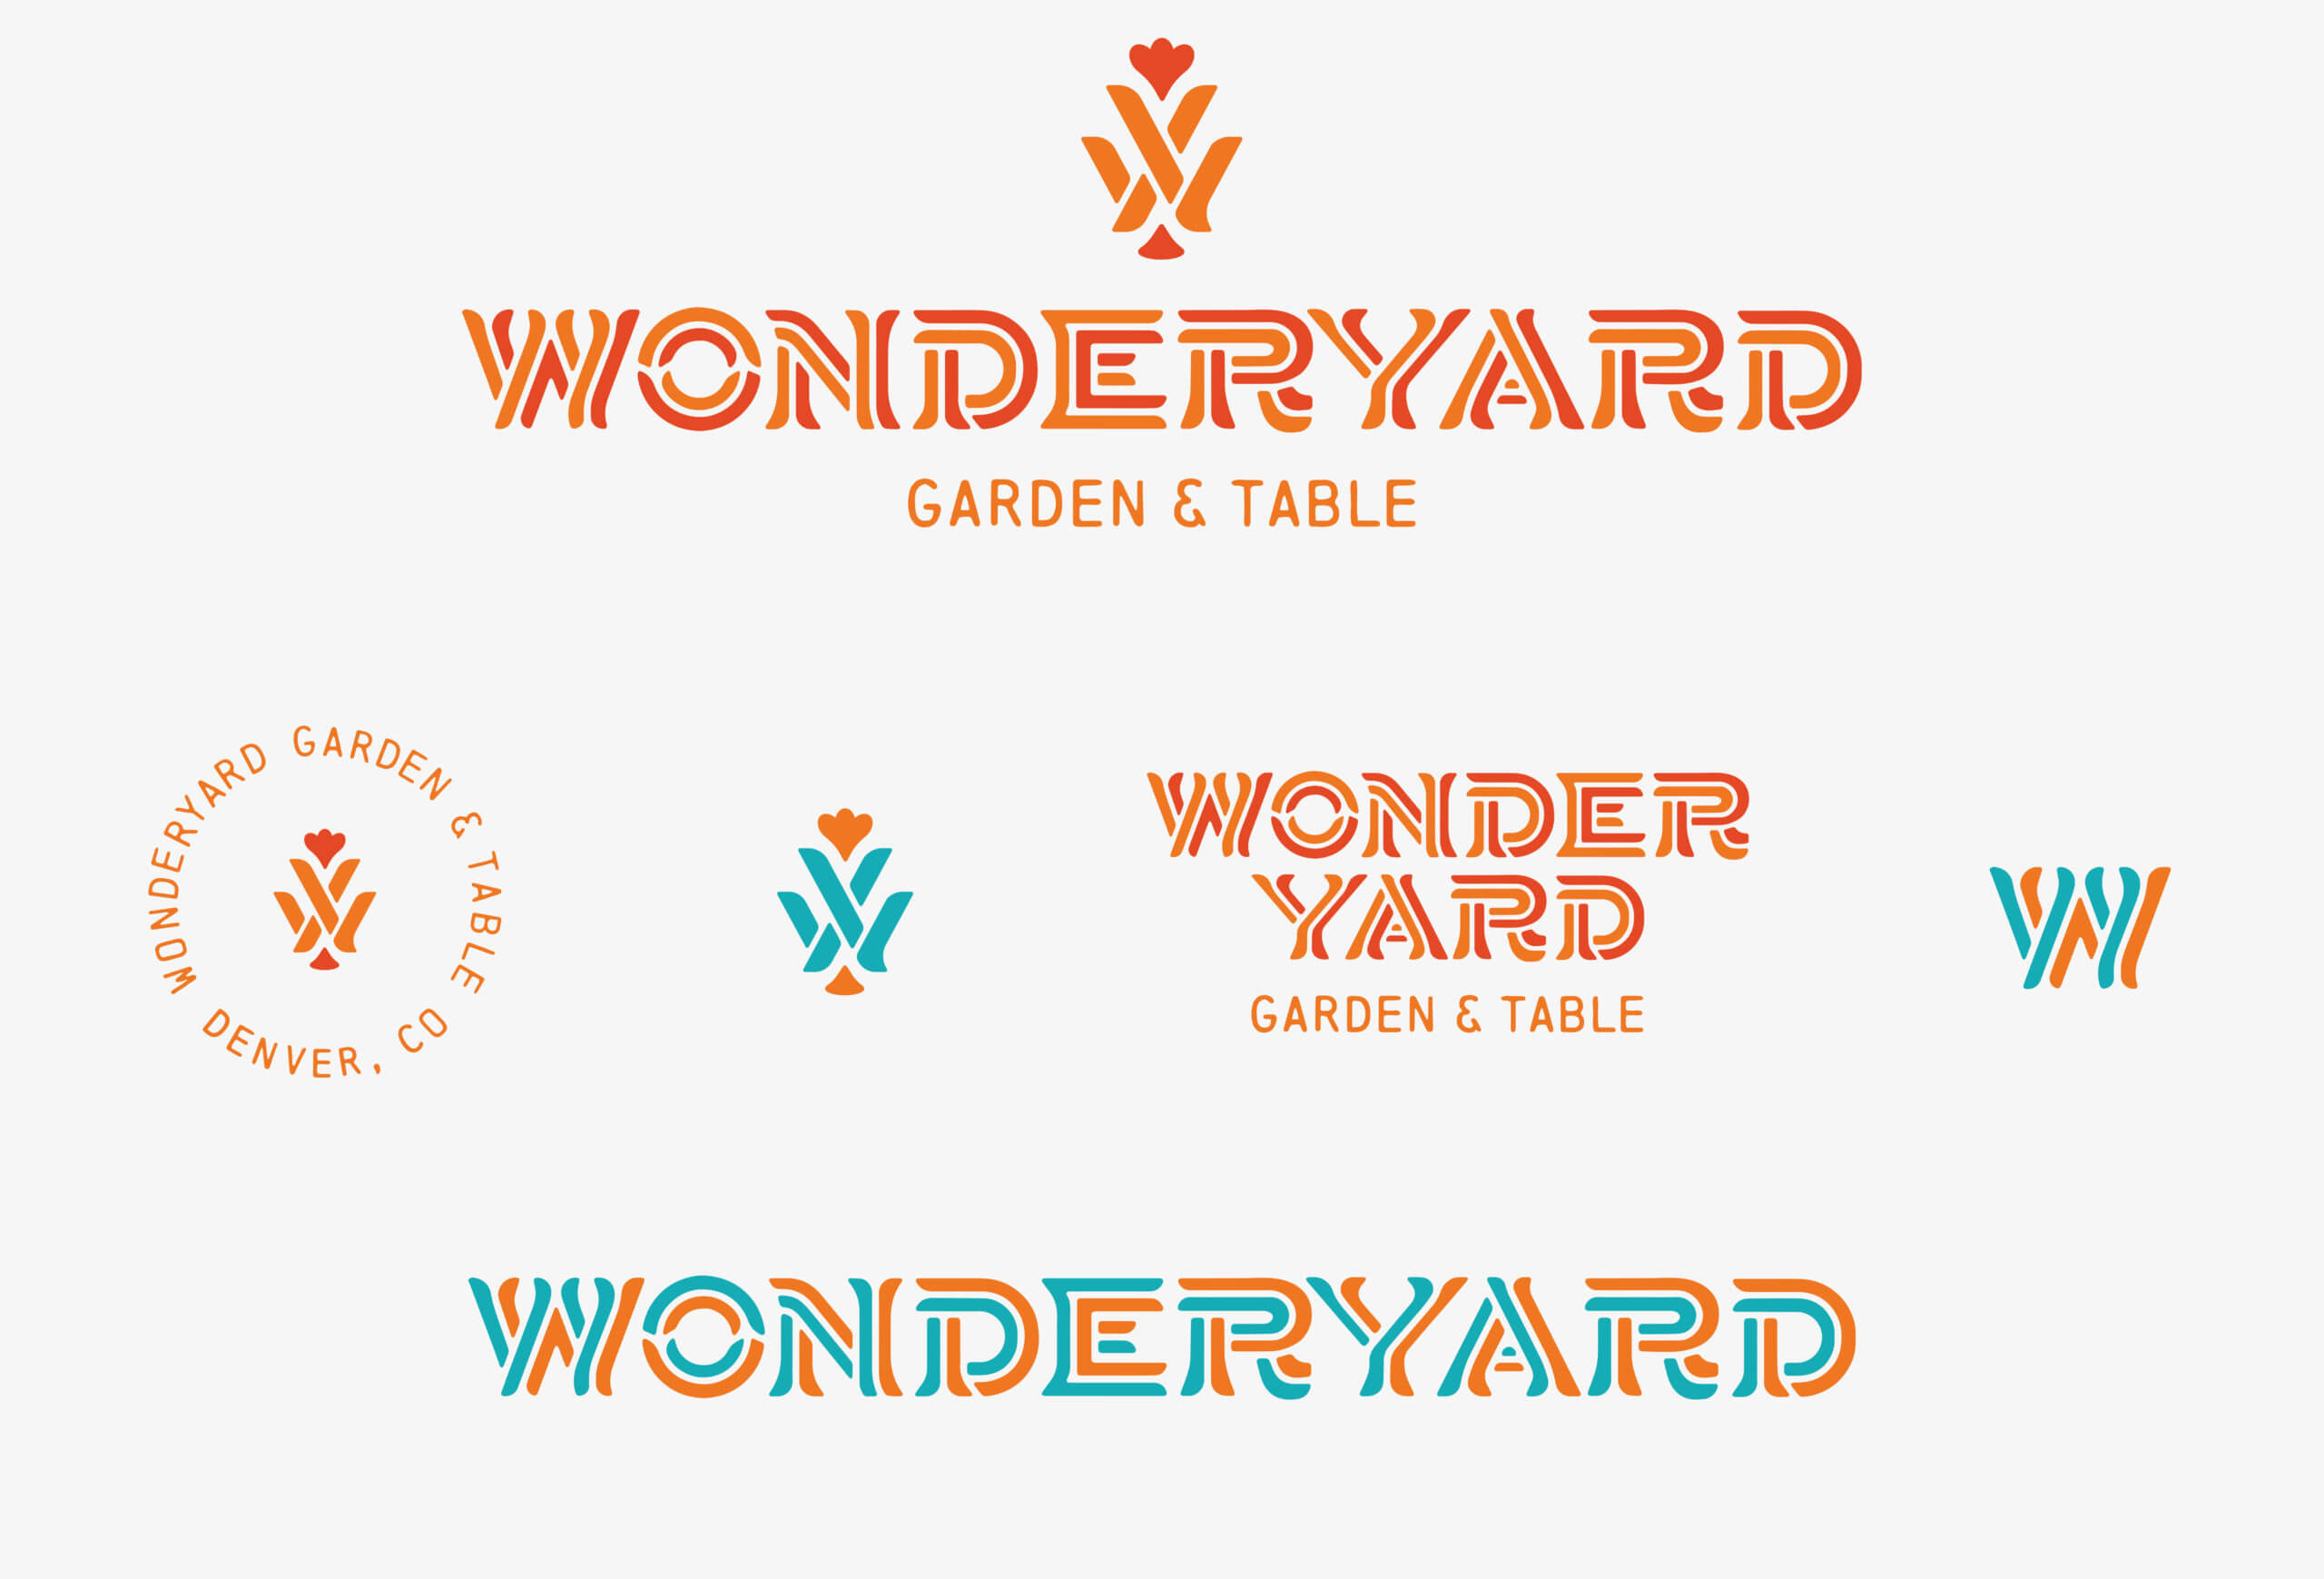 Wonderyard restaurant logo system